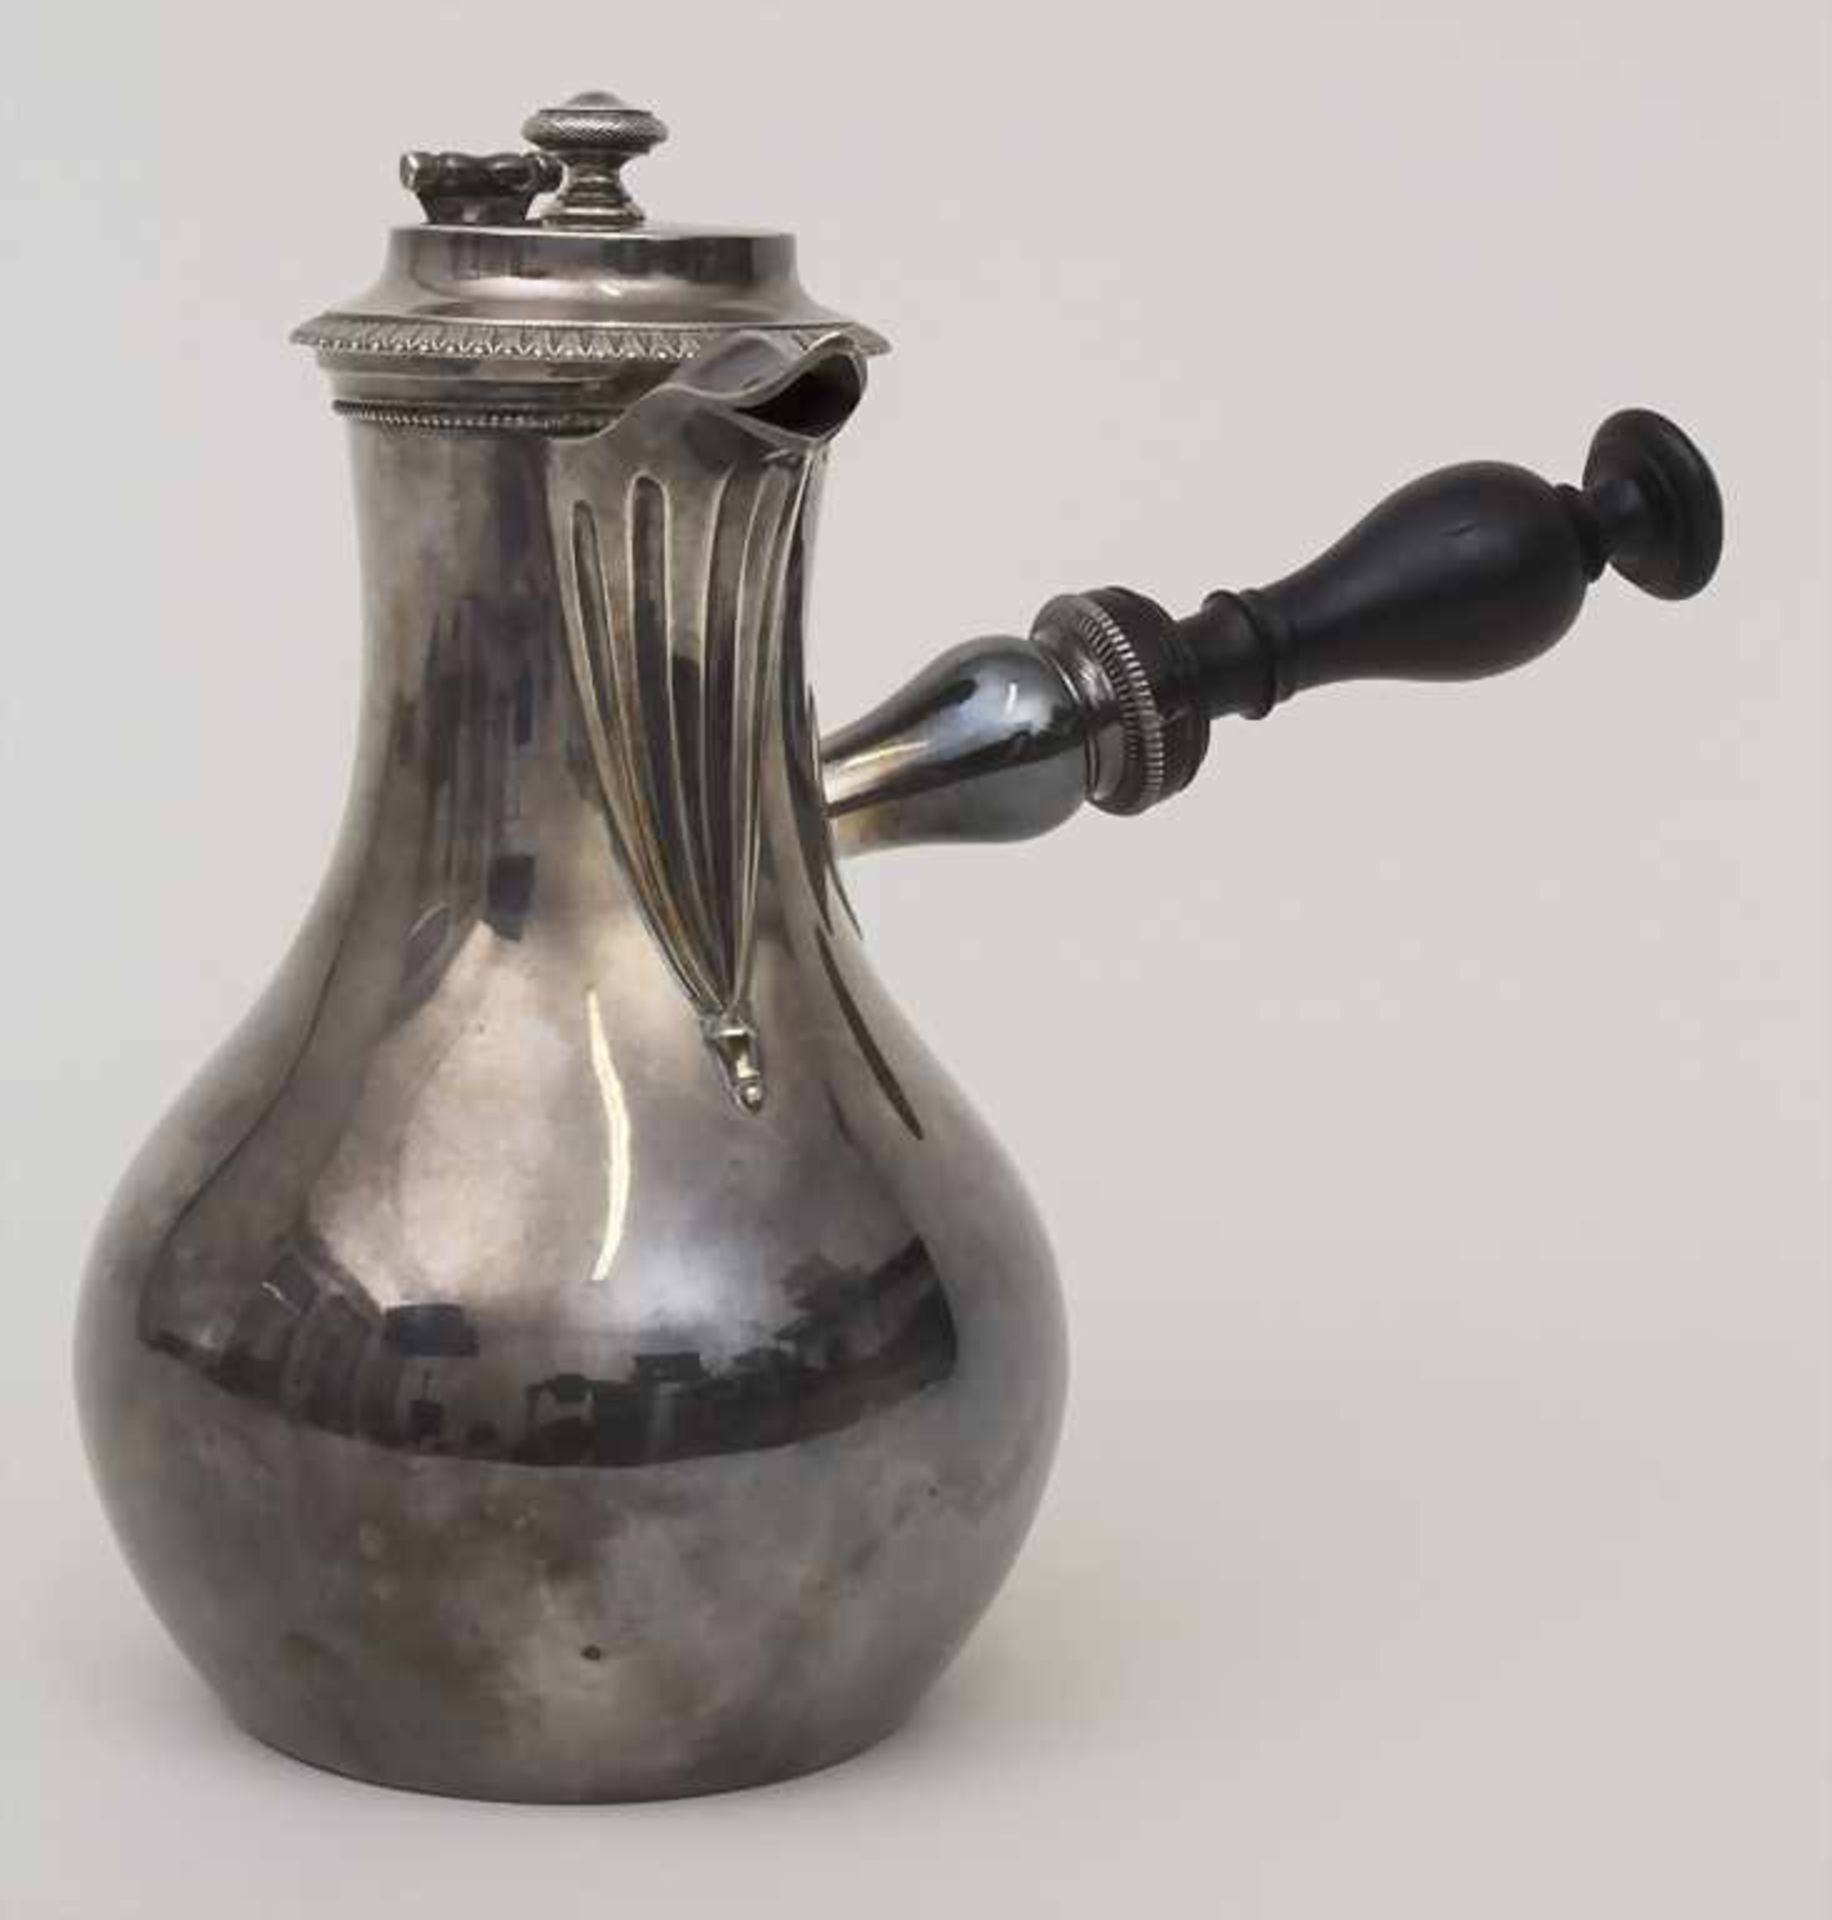 Heißwasser-Kanne / A silver verseuse, Jean Pierre Famechon, Paris, um 1820Material: Silber 950,